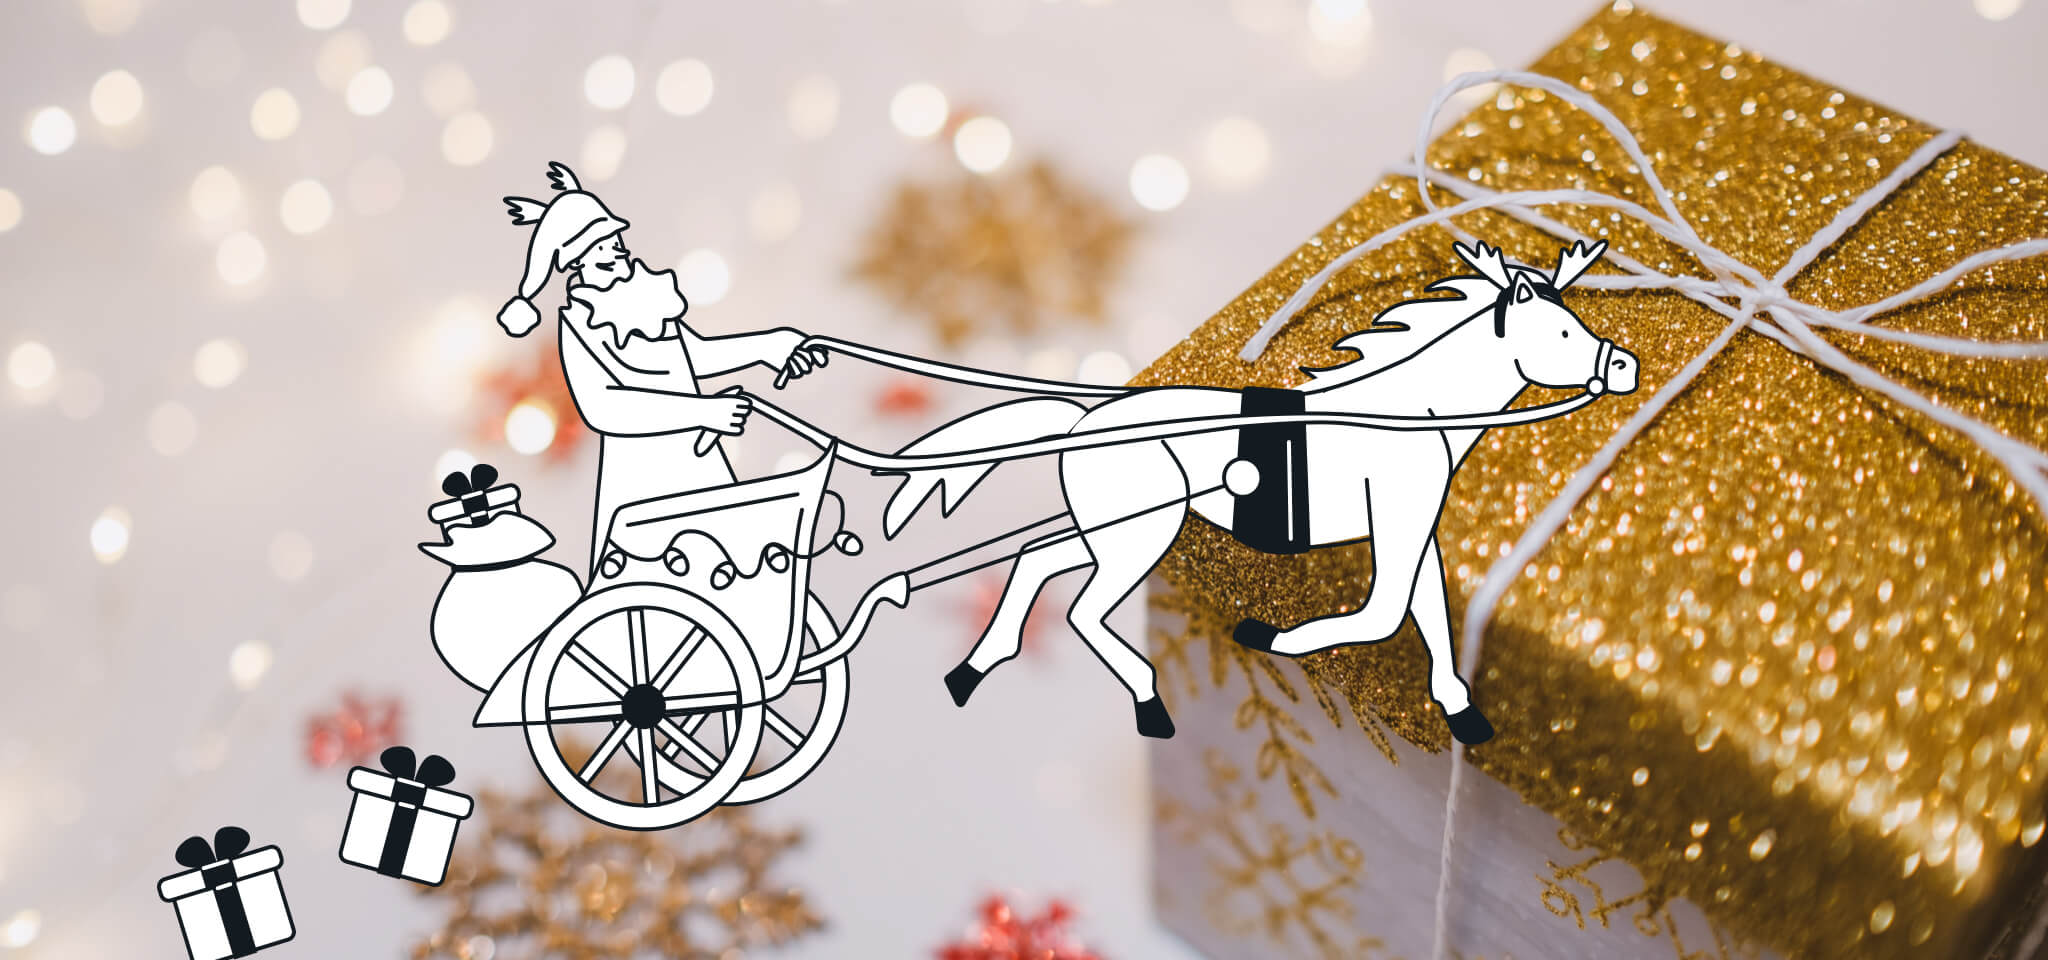 Hermes riding the sleigh